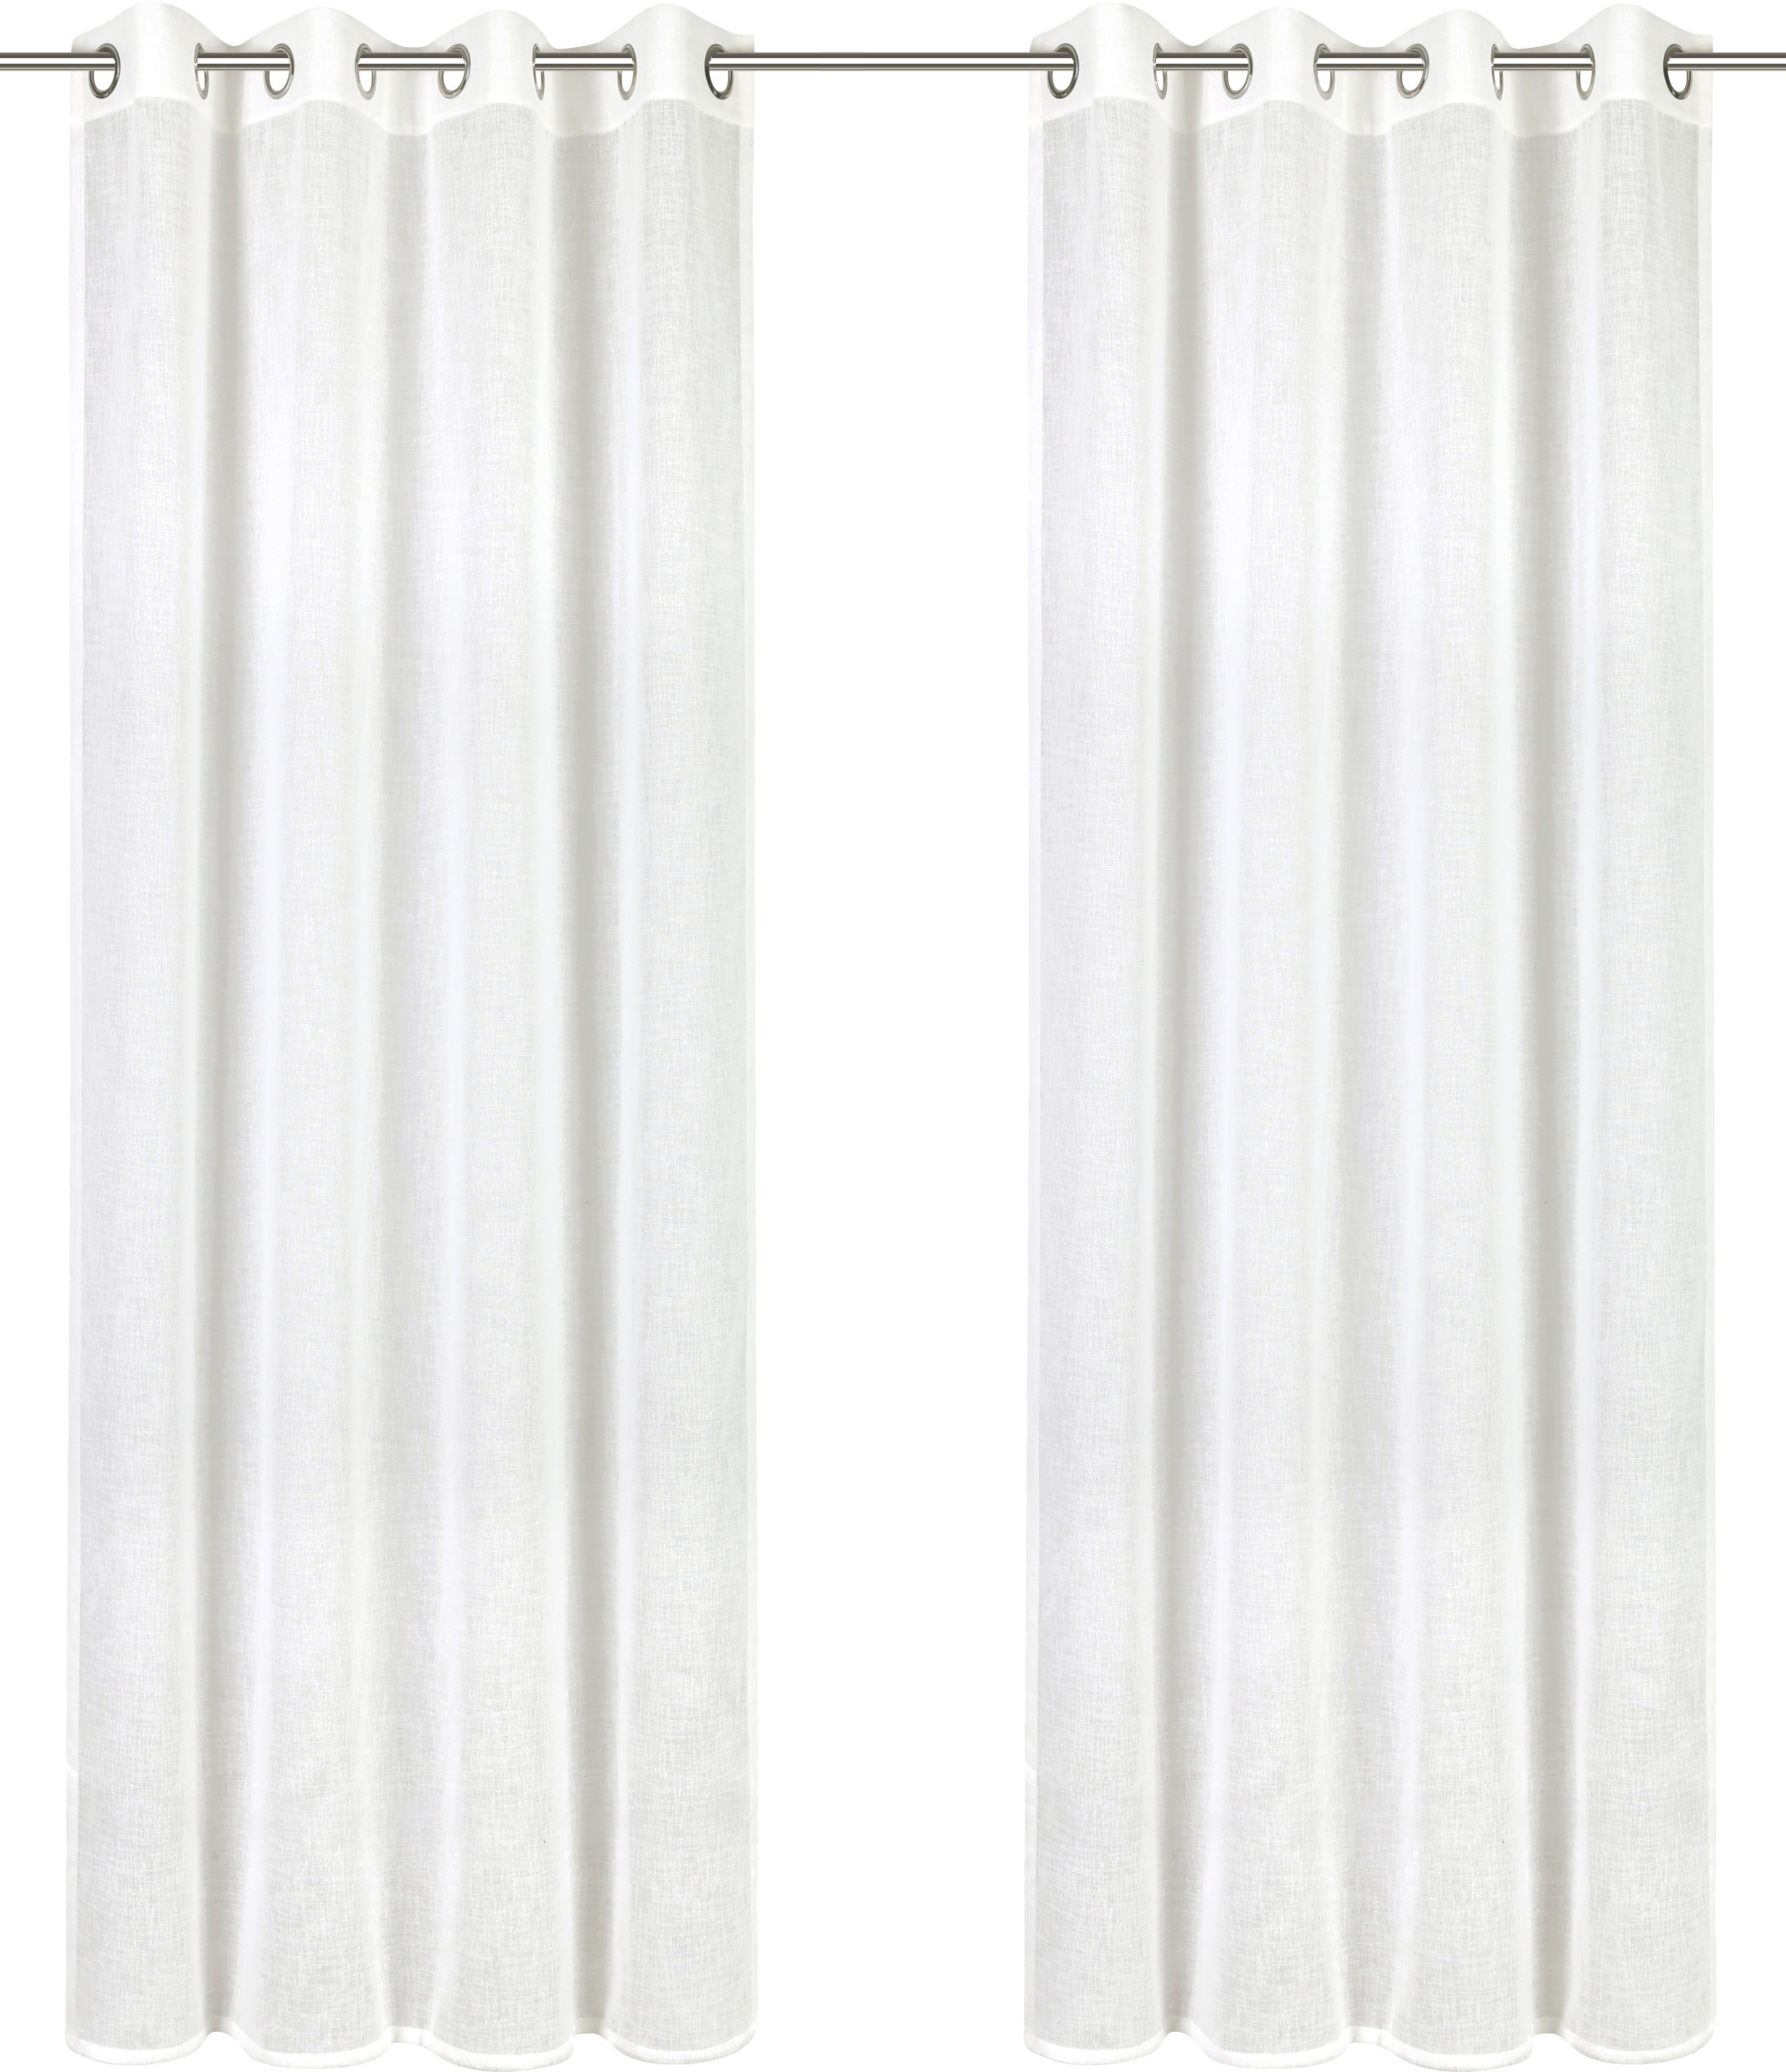 elbgestoeber Gordijn Elbsegel 4 transparant, linnen look, basic, monochroom, tot 295 cm lang (1 stuk)